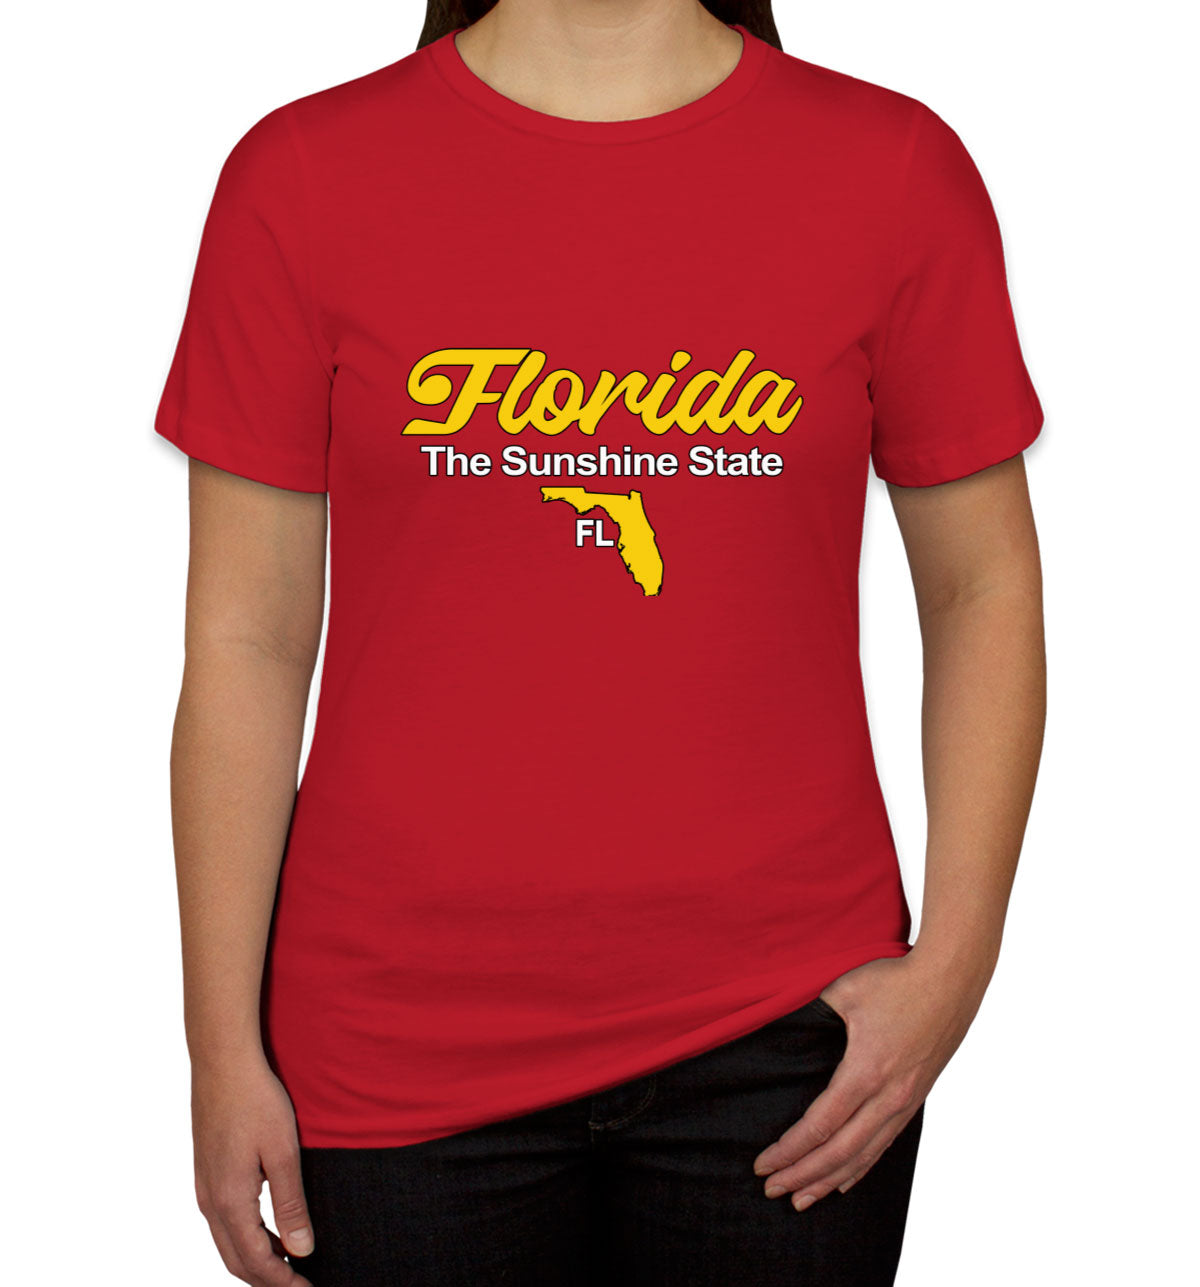 Florida The Sunshine State Women's T-shirt